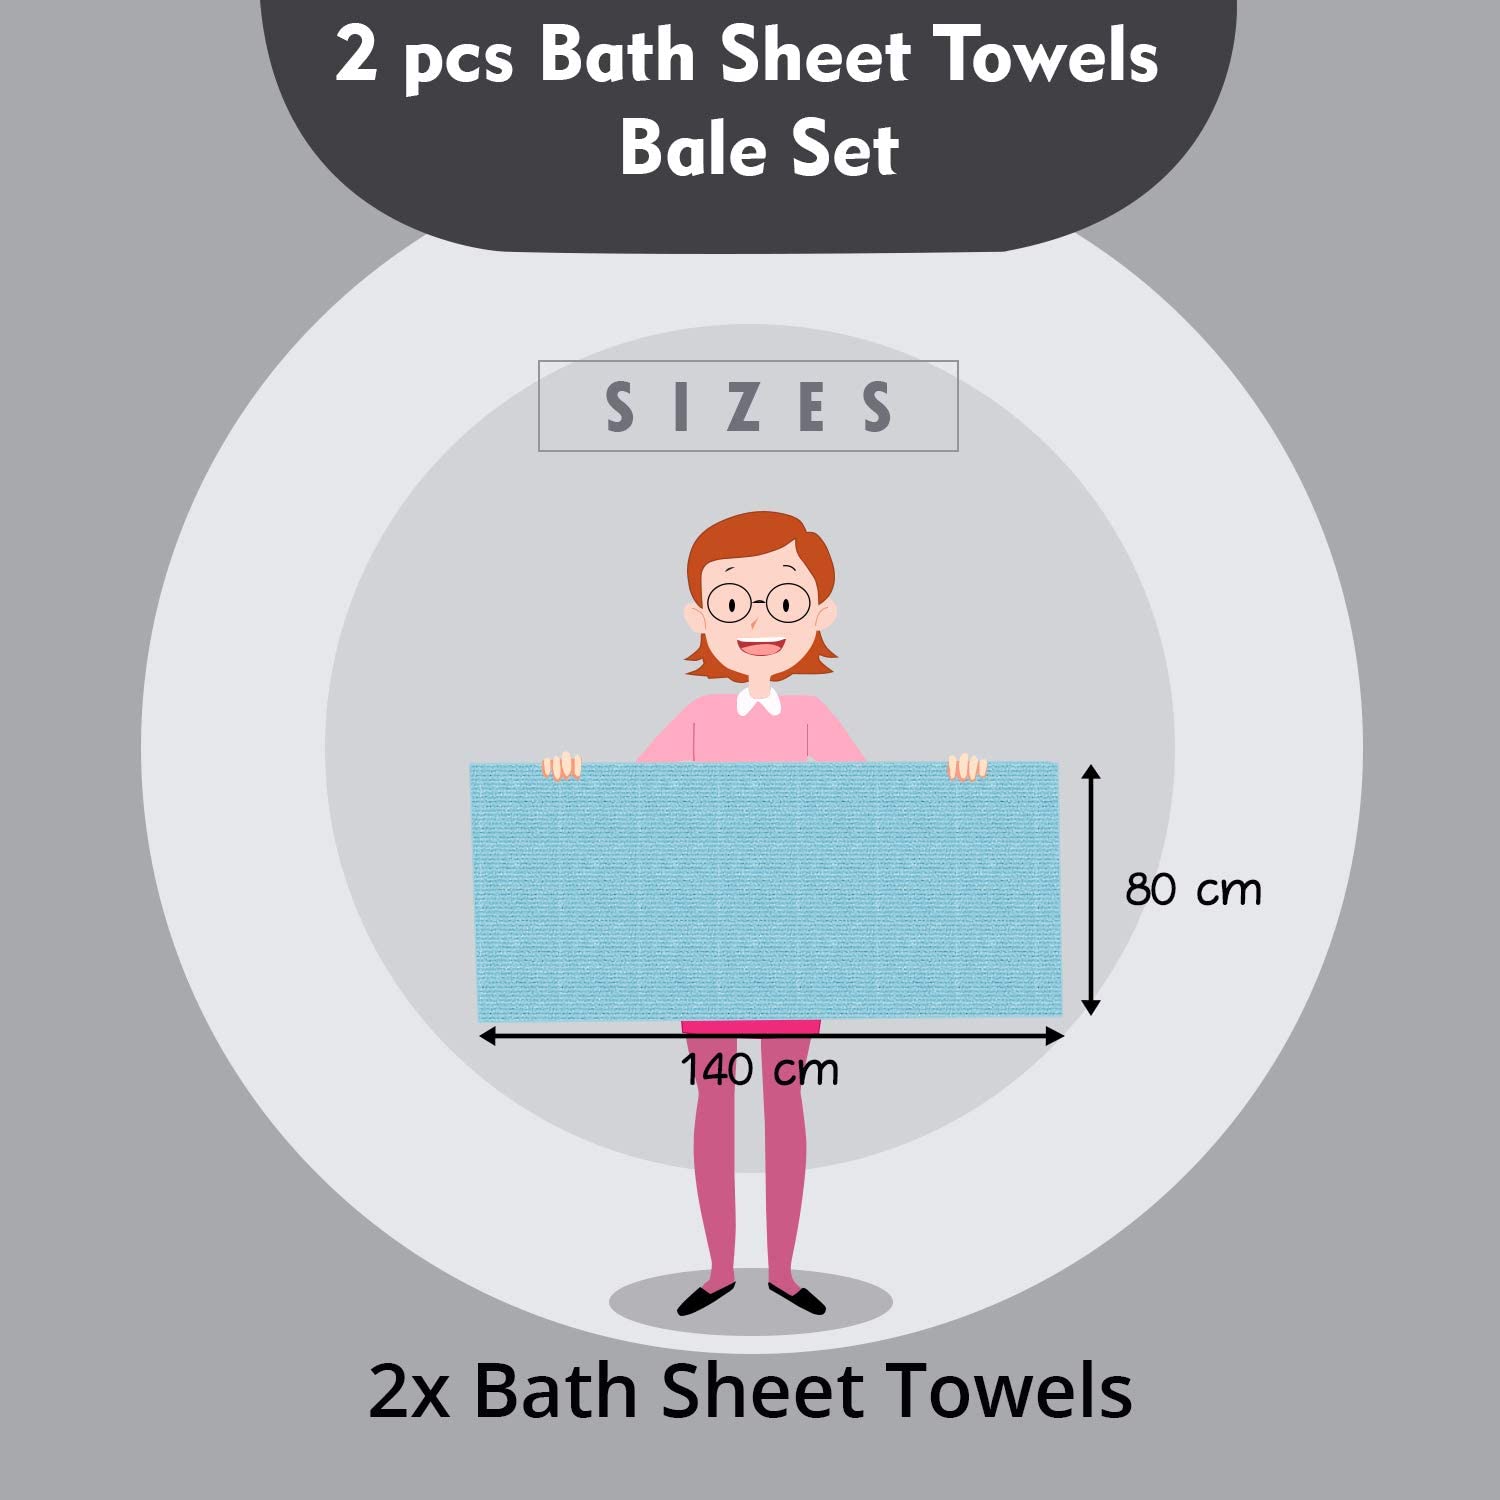 2 Pcs 100 % Cotton Premium Bath Sheet Towel Bale Set Burgundy Plain